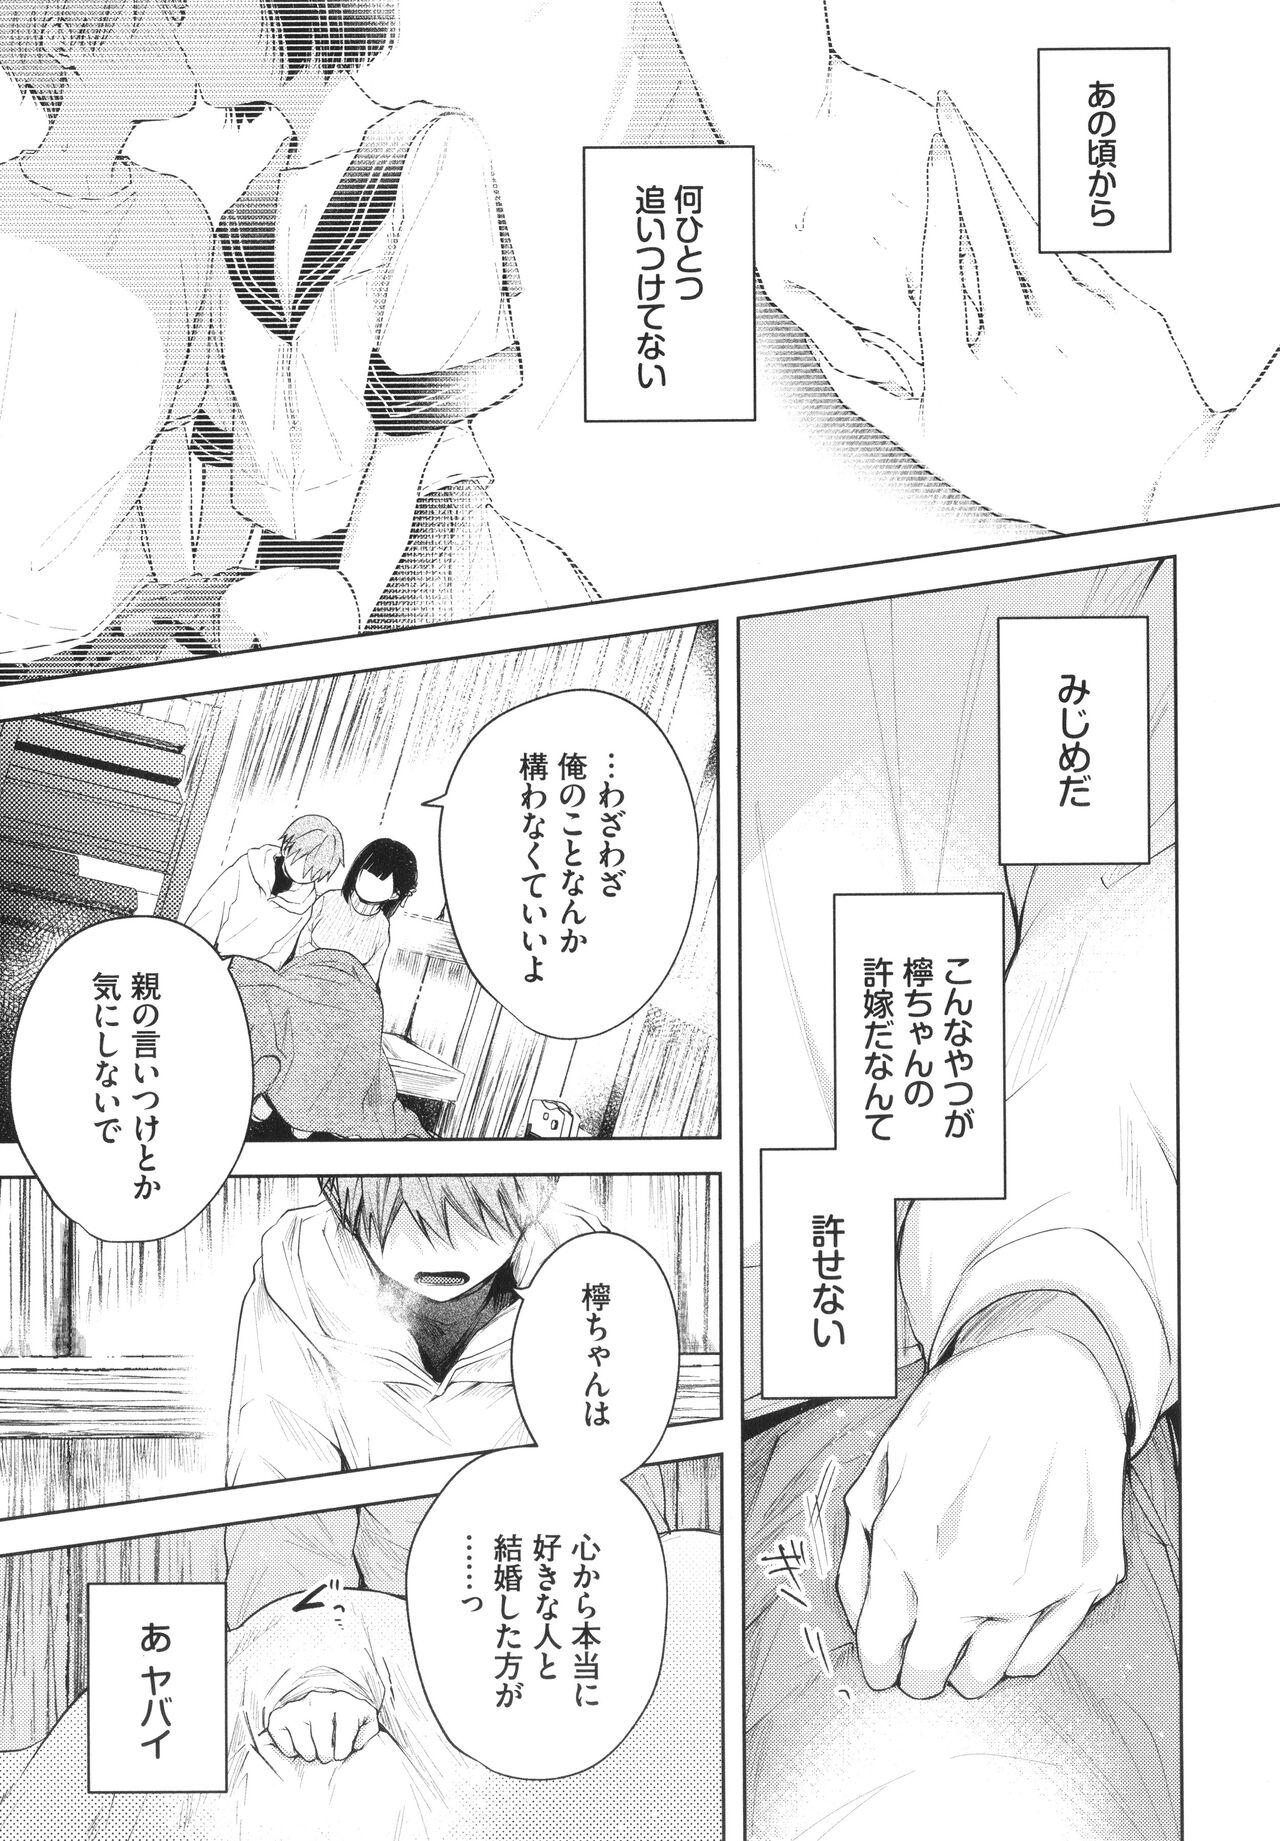 Shaking Ii mo Amai mo Kimi to Dake. - You're the only one I love. Mediumtits - Page 10